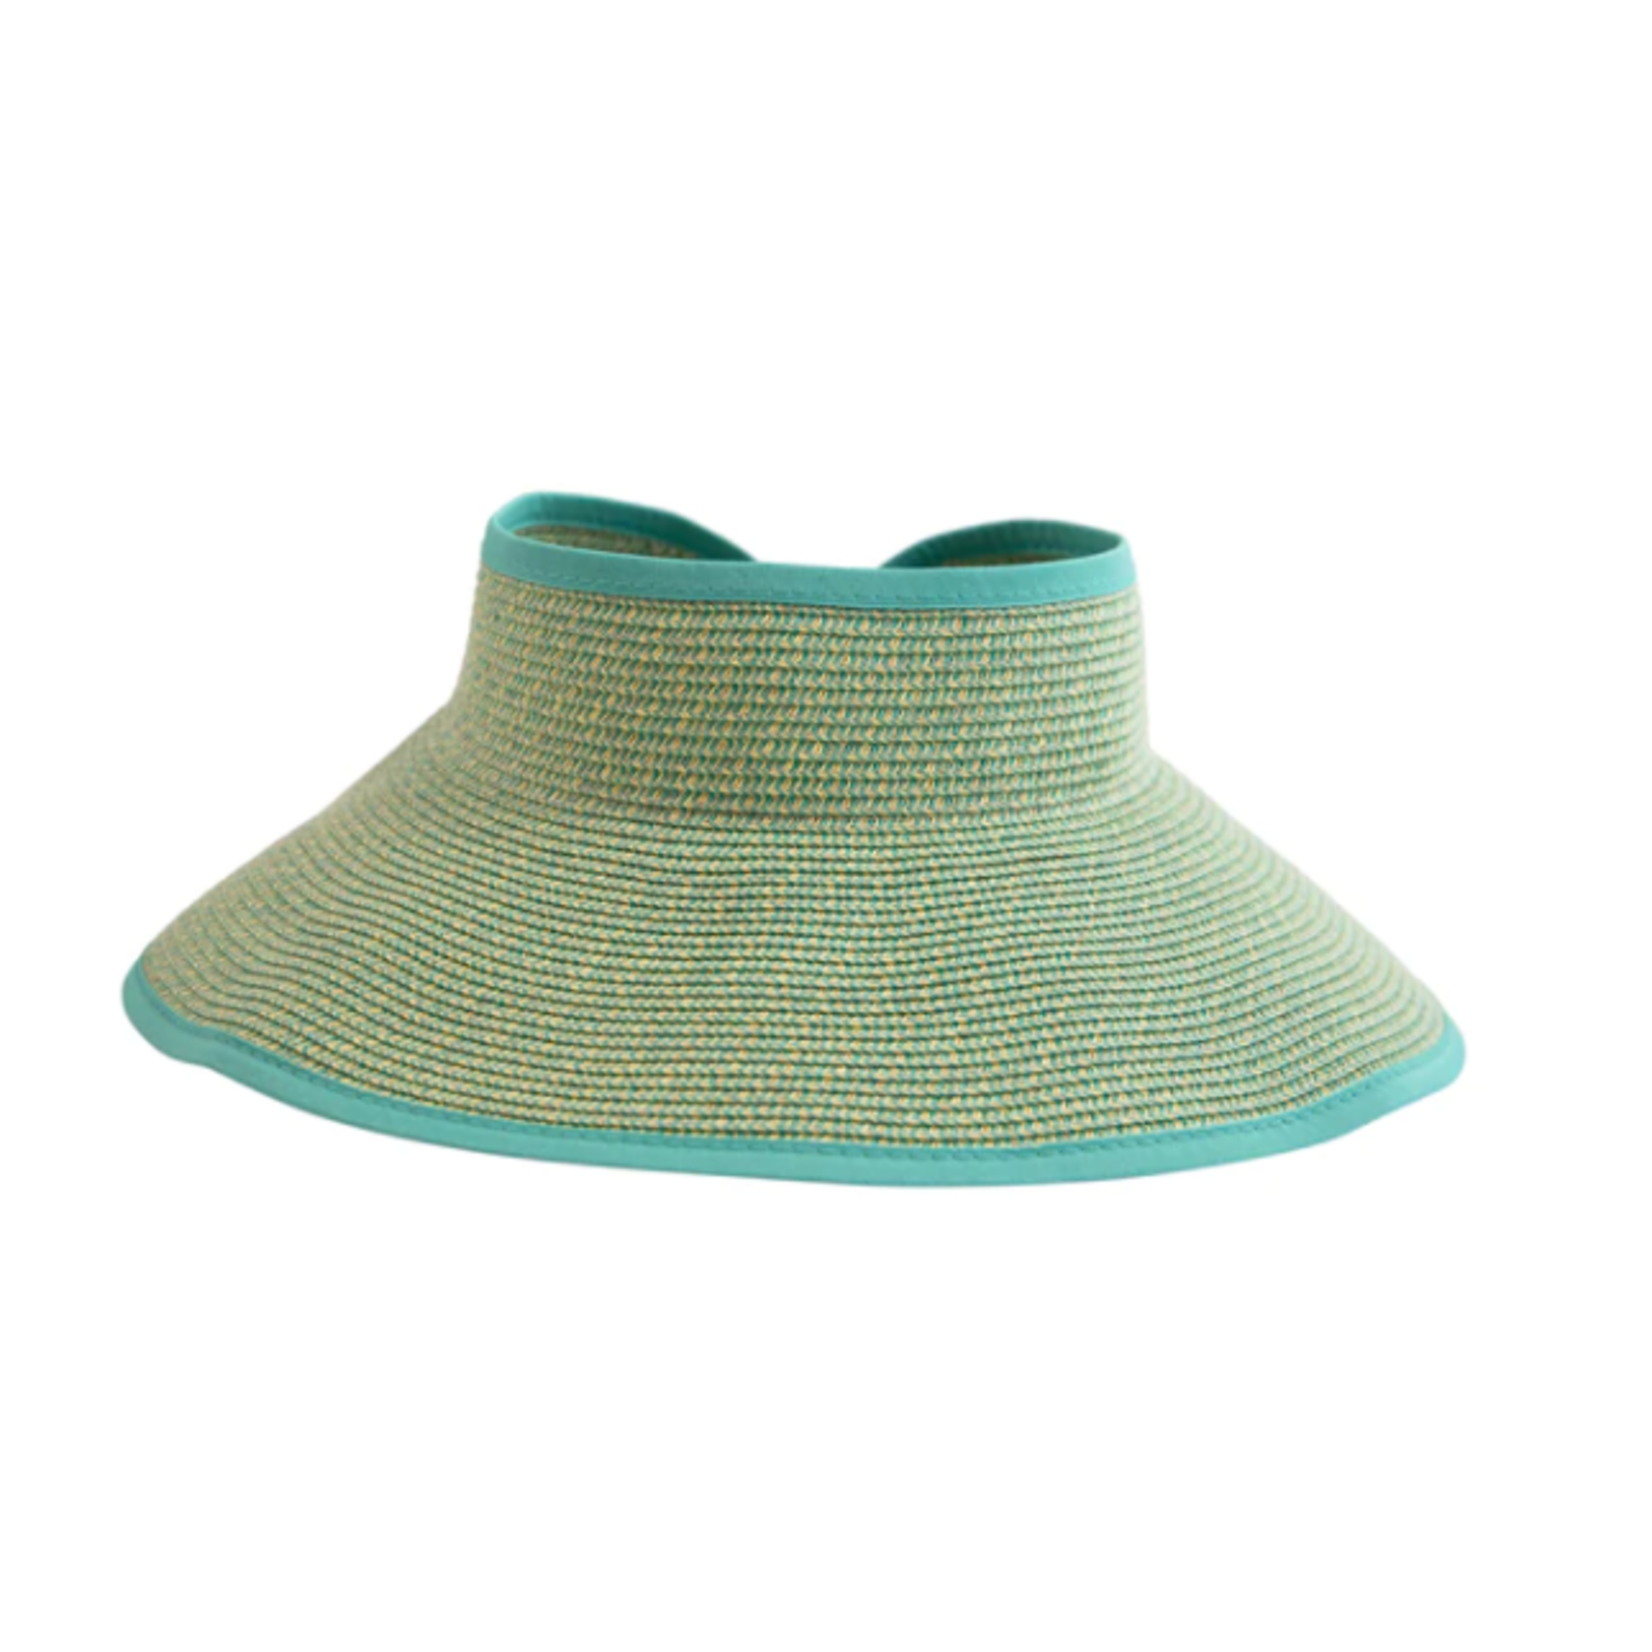 Ultrabraid Large Brim Visor Hat in Aqua